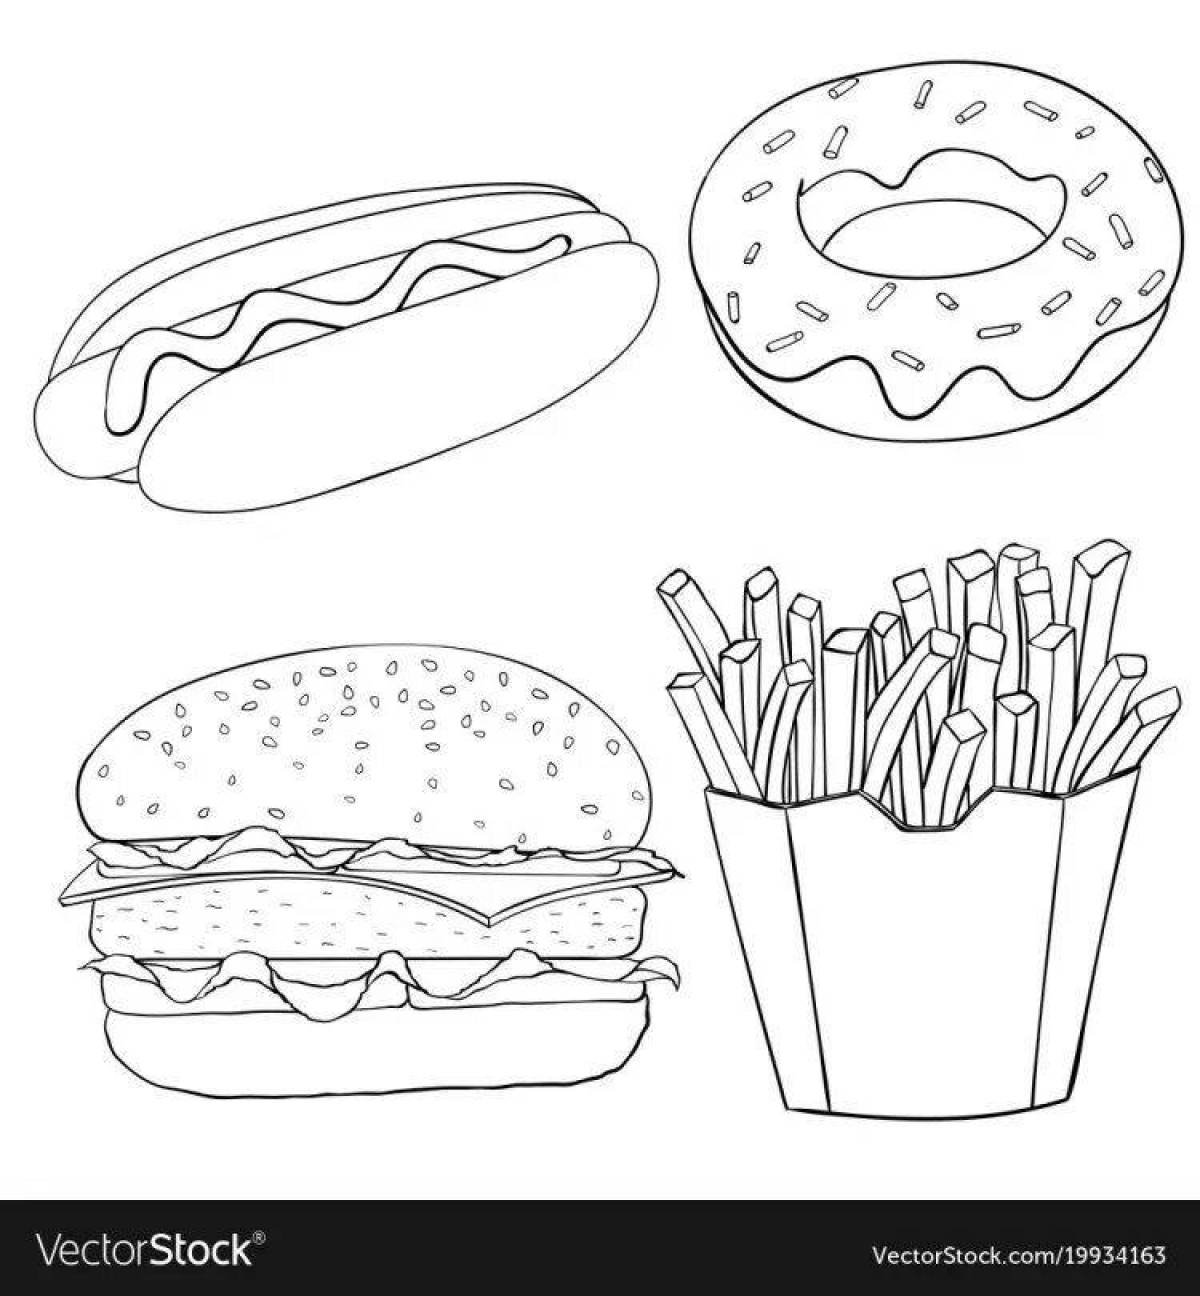 Еда карандашом легко. Раскраски фаст фуд. Раскраски для срисовки еда. Раскраска бургер. Раскраска гамбургер.